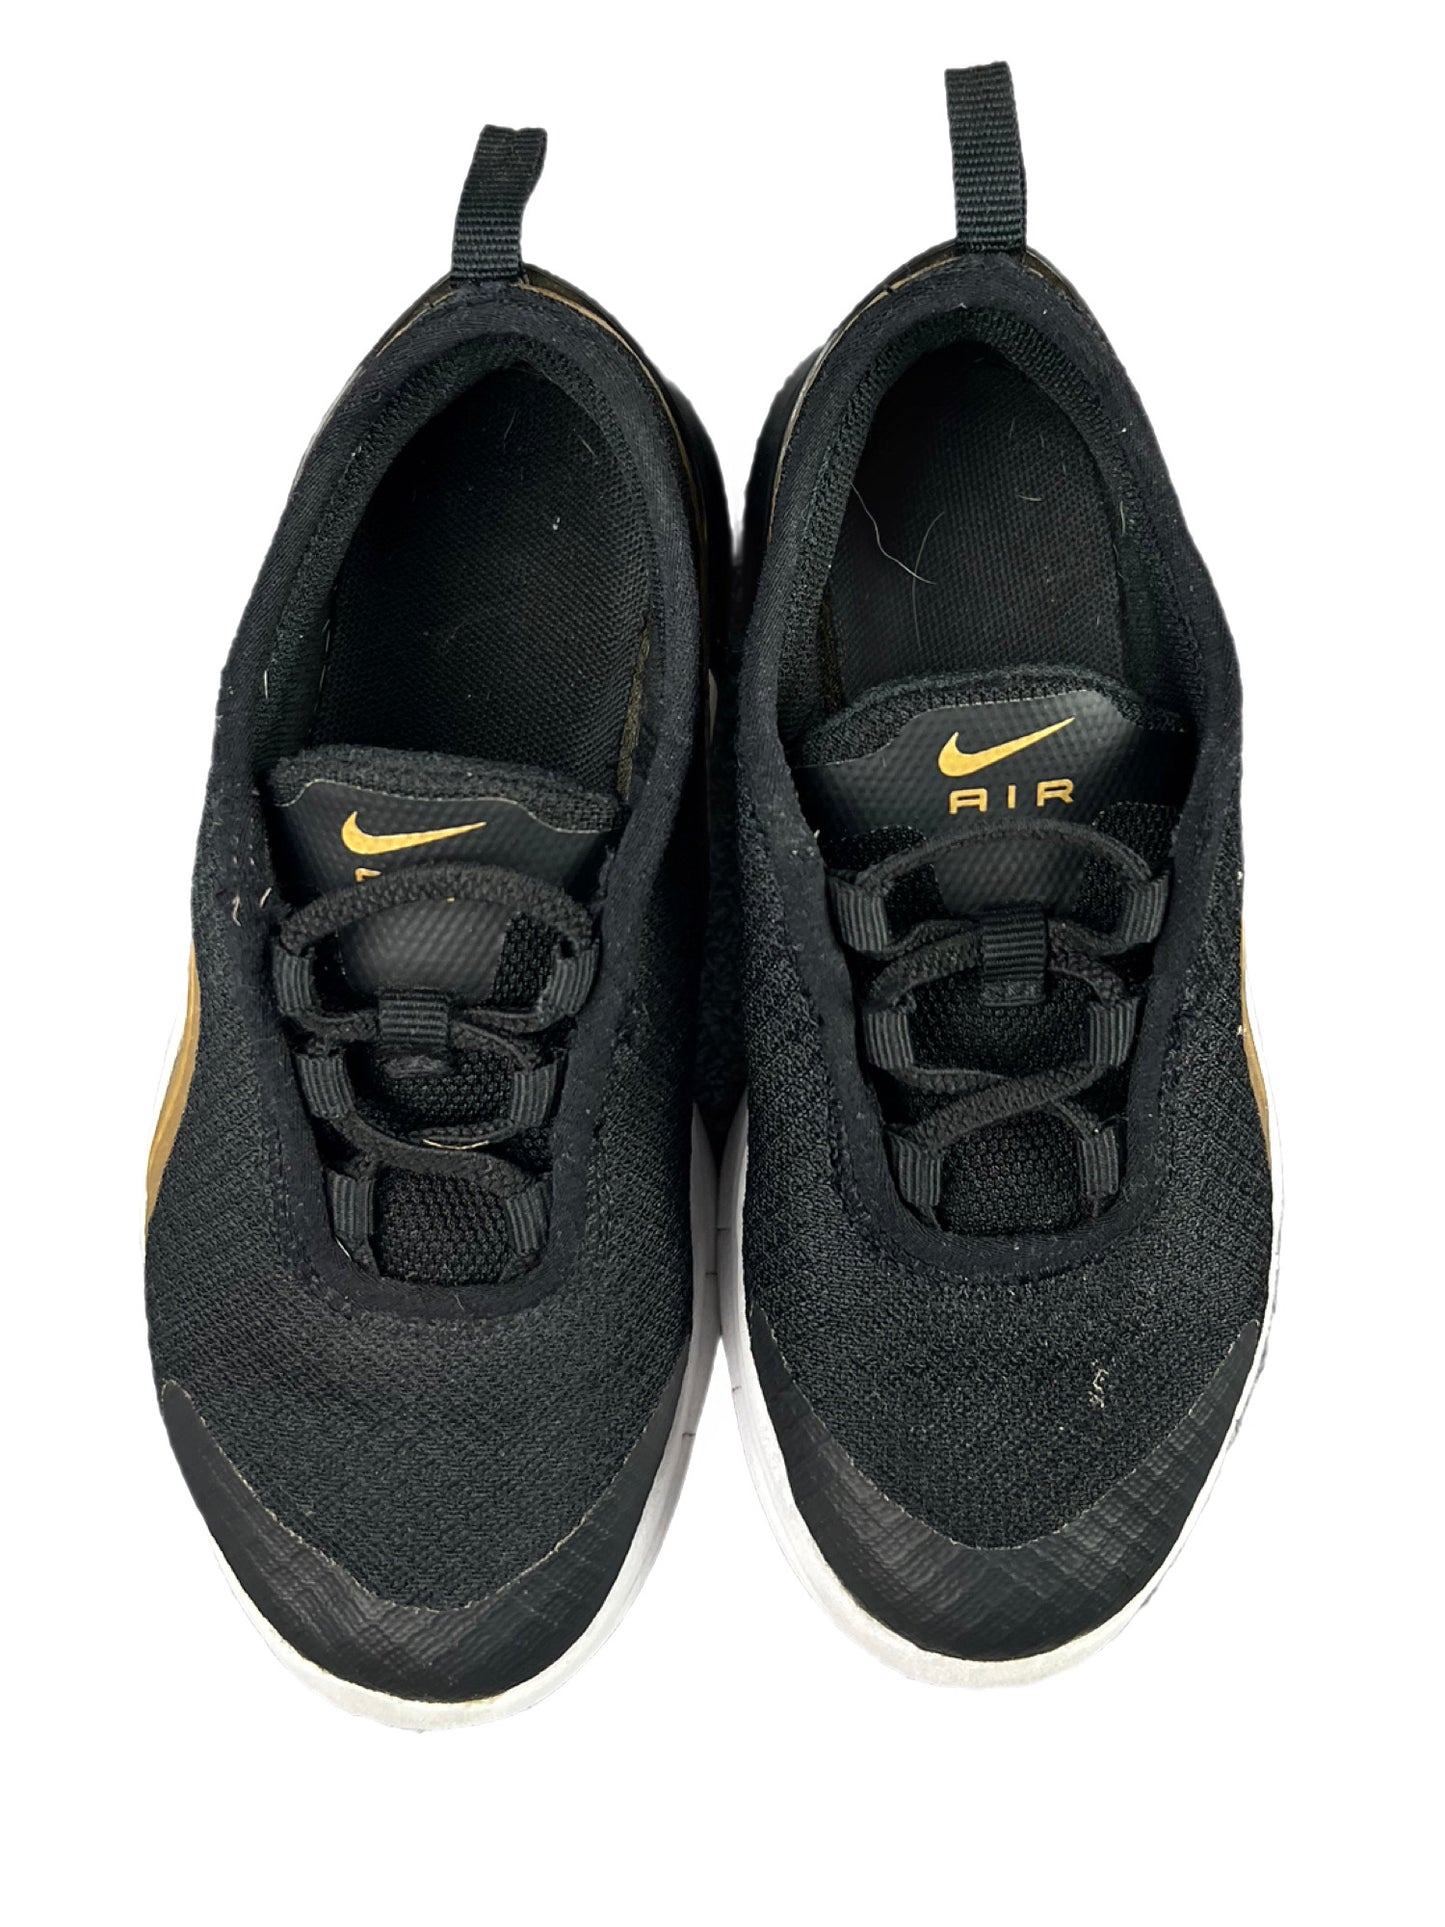 Shoes 10.0 Nike